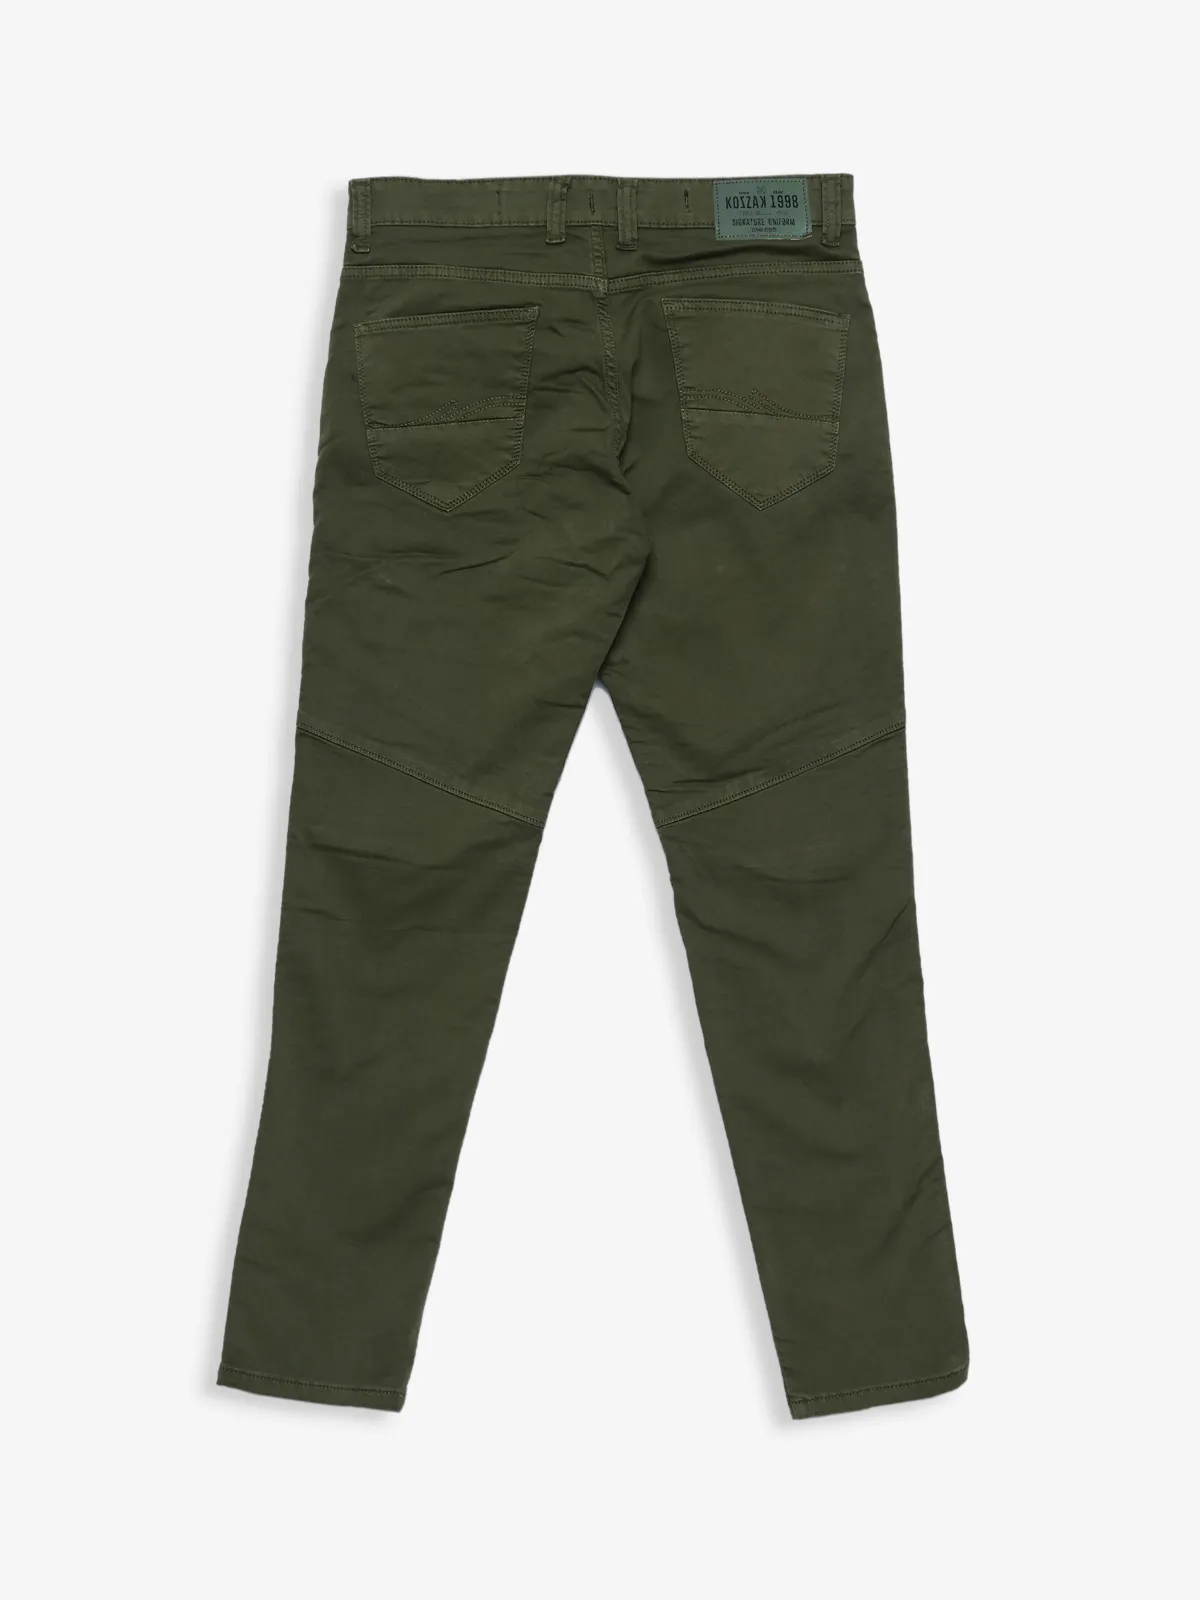 Kozzak olive super skinny fit cargo jeans